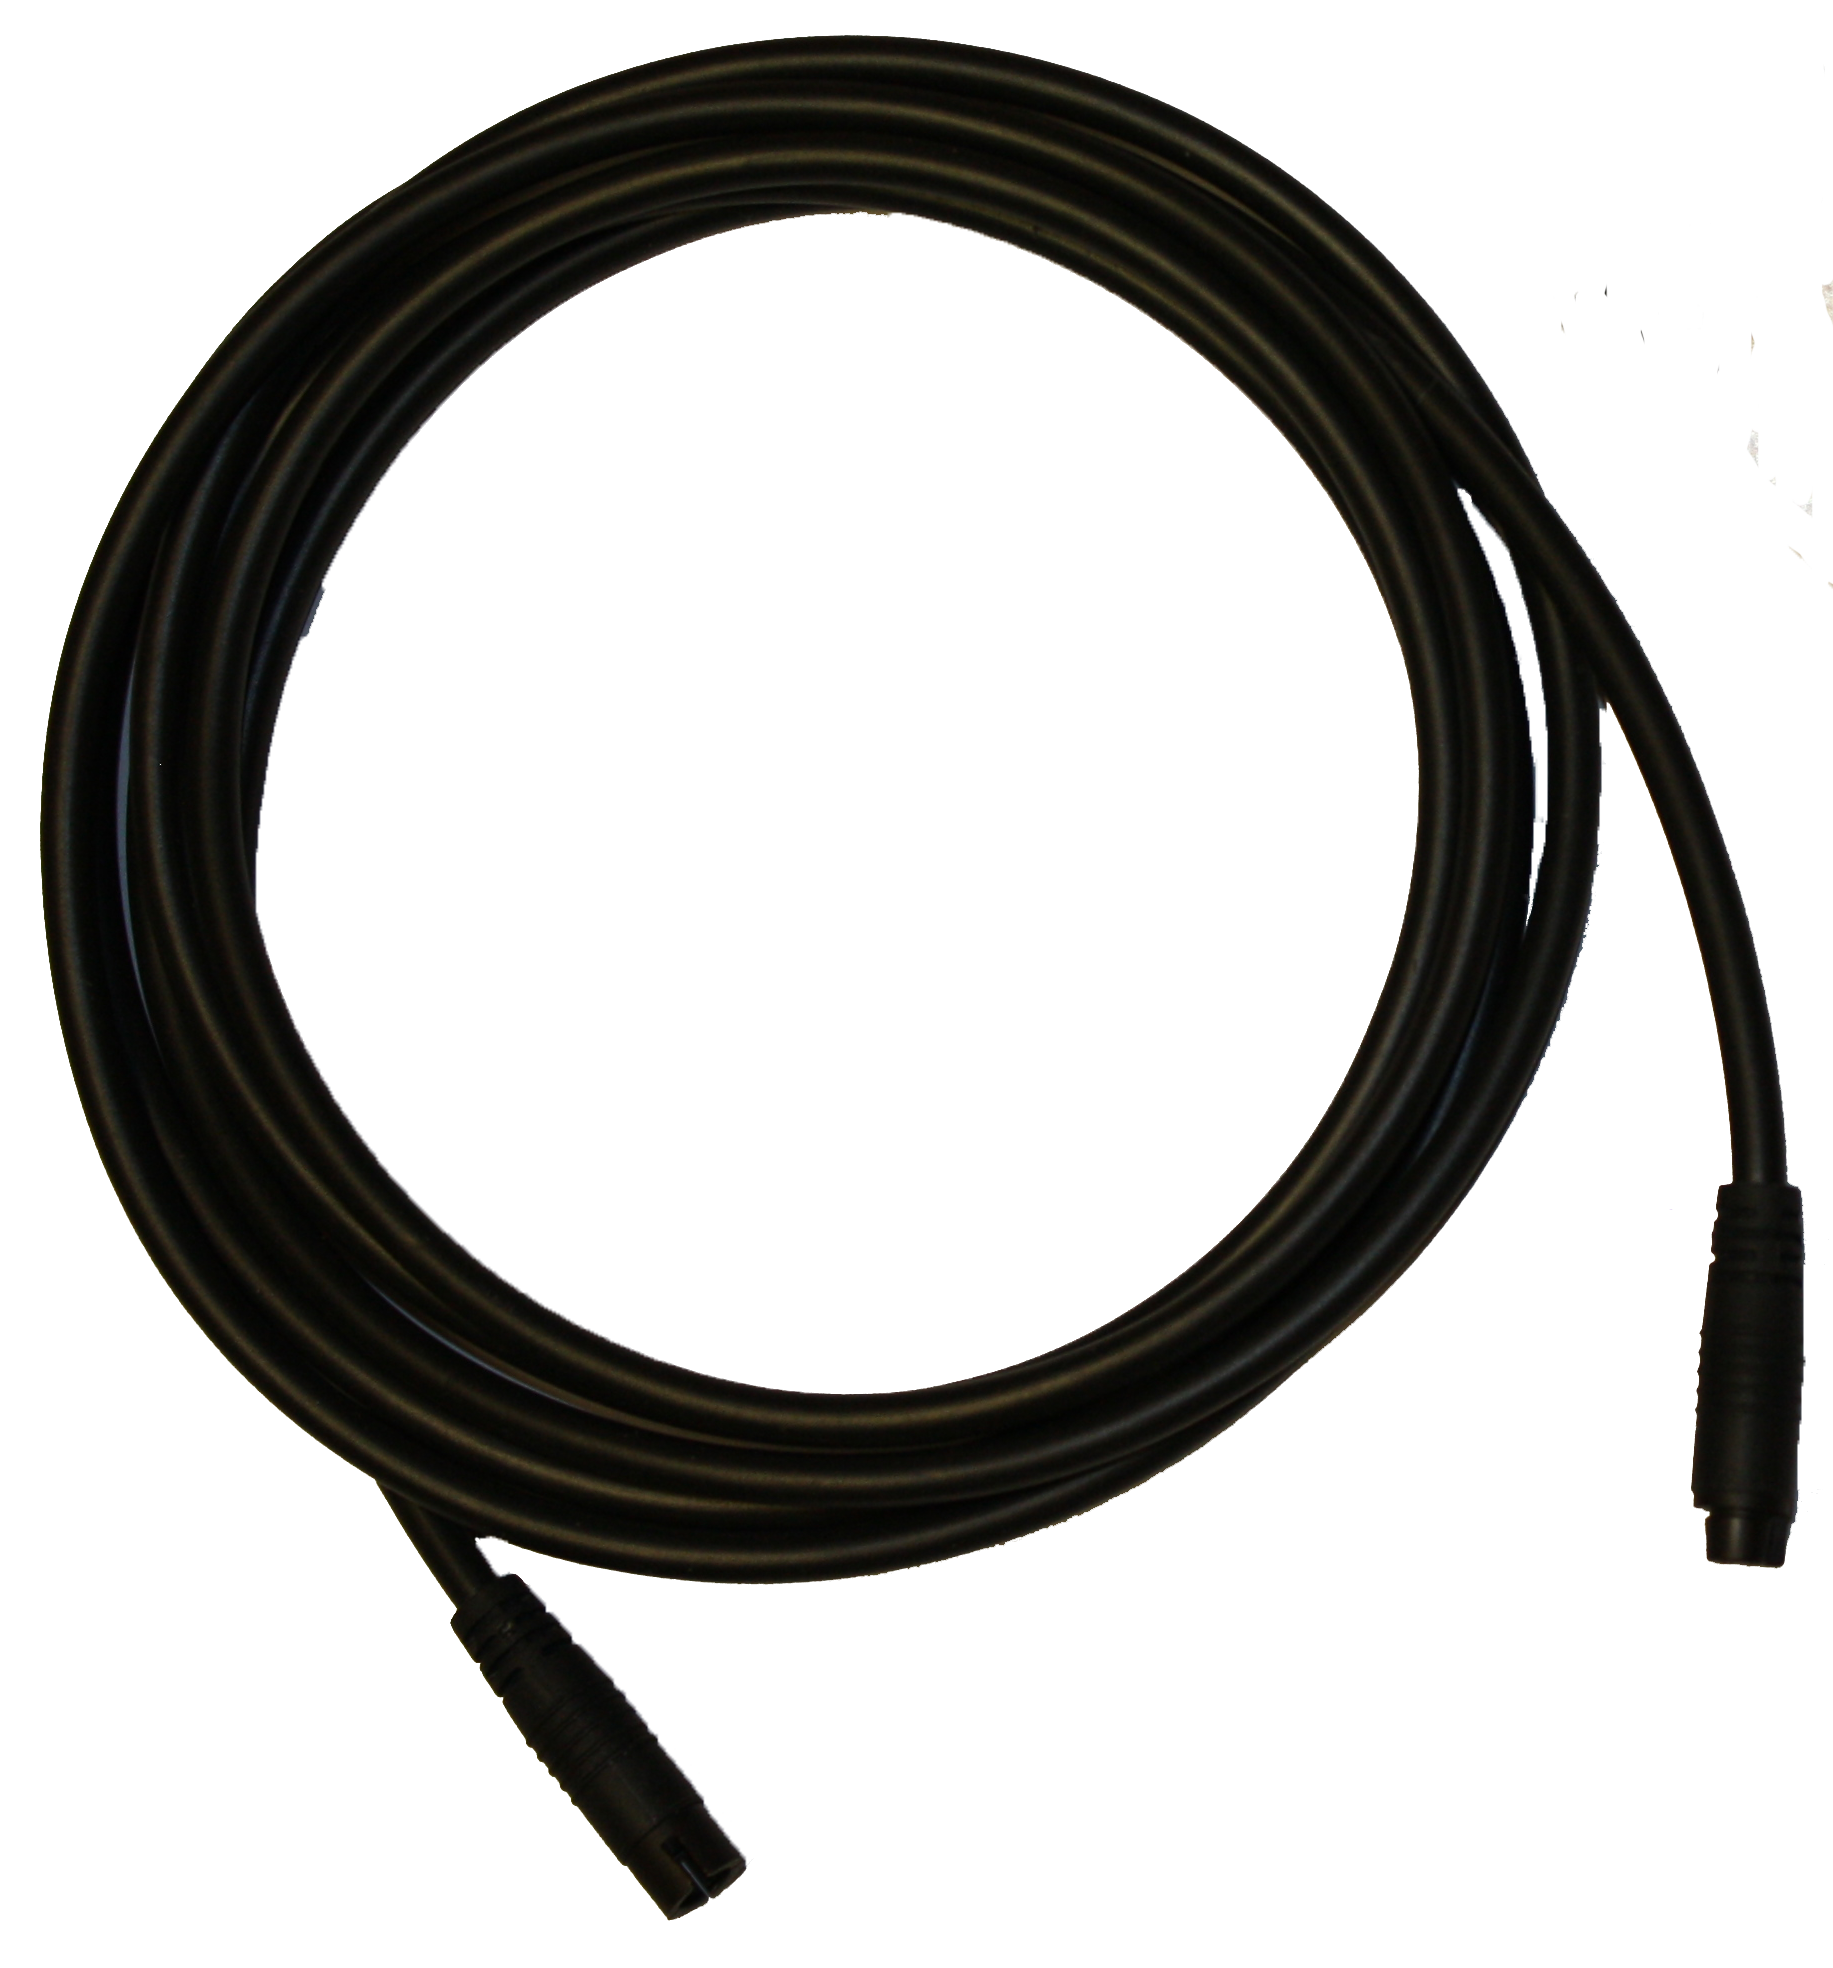 Kabel in 2m Standardlänge